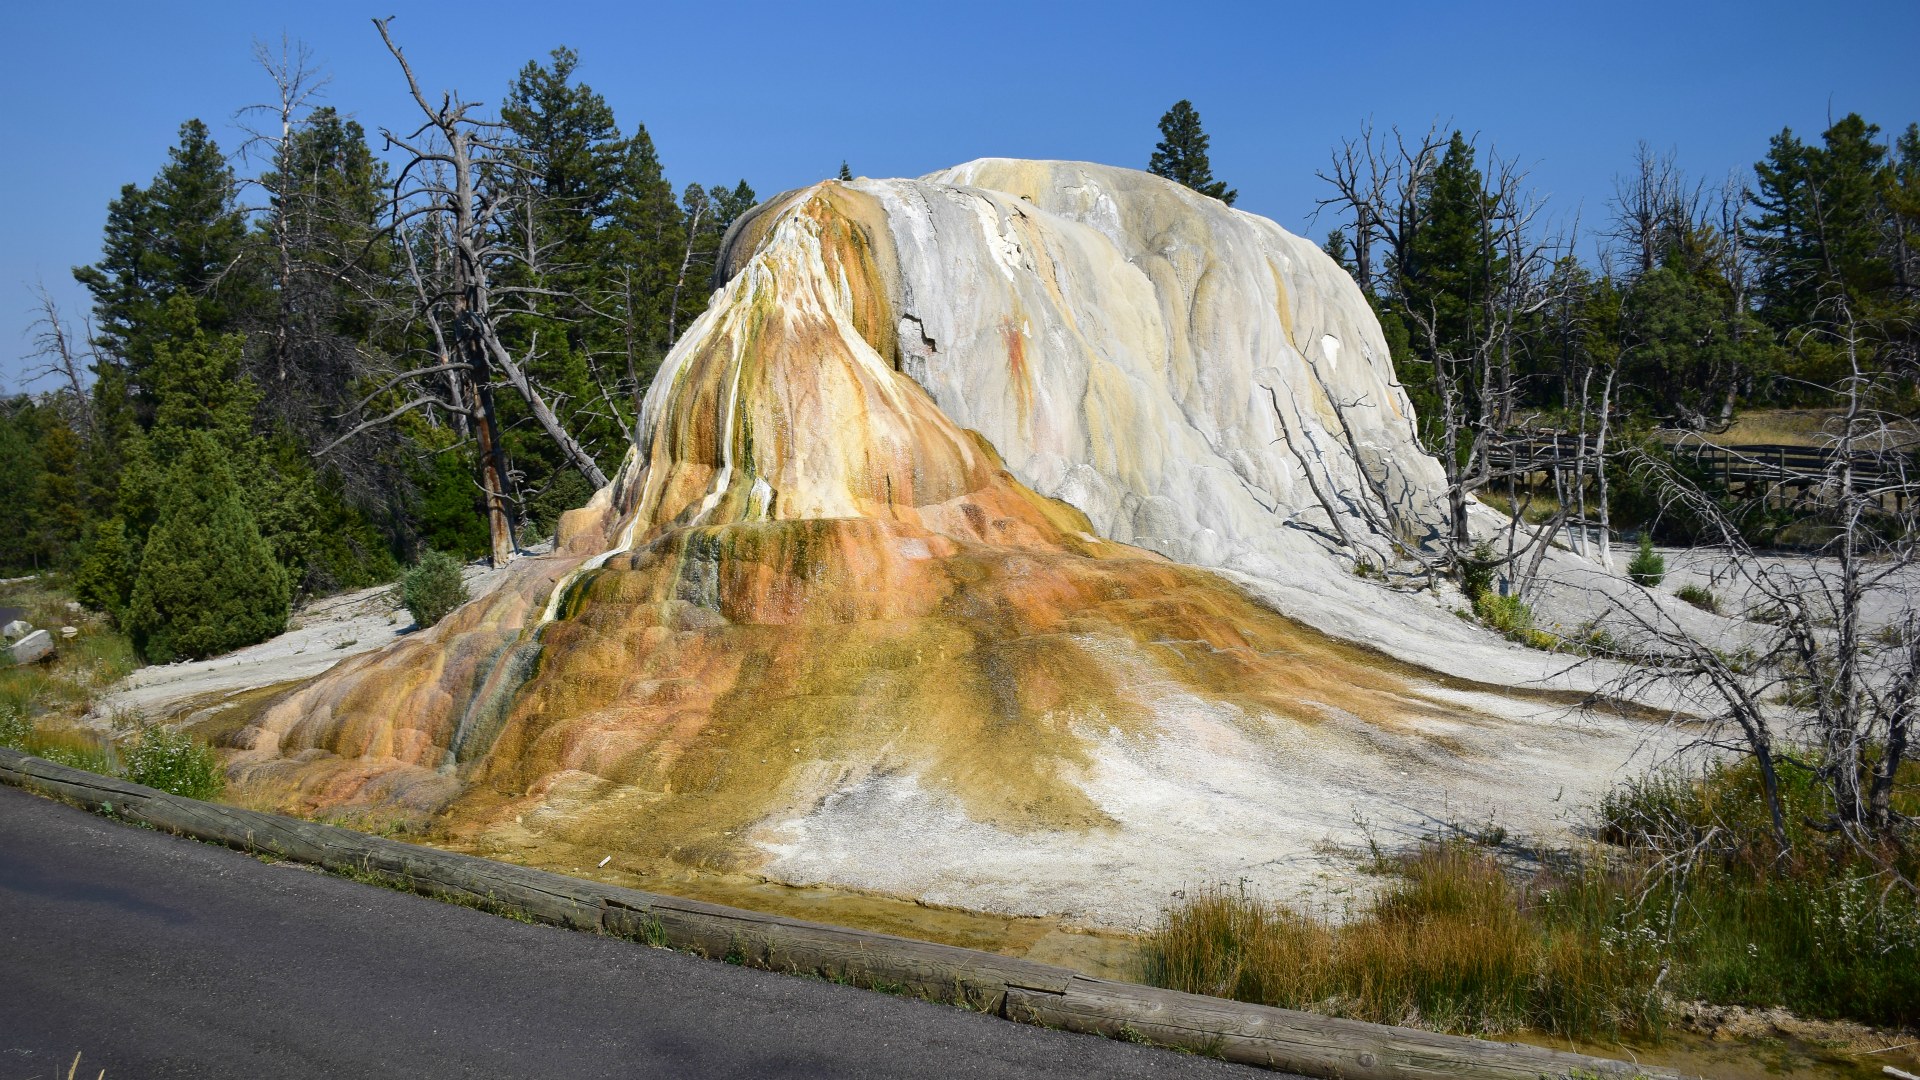 Orange Spring Mound, Mammoth Hot Springs, Yellowstone National Park